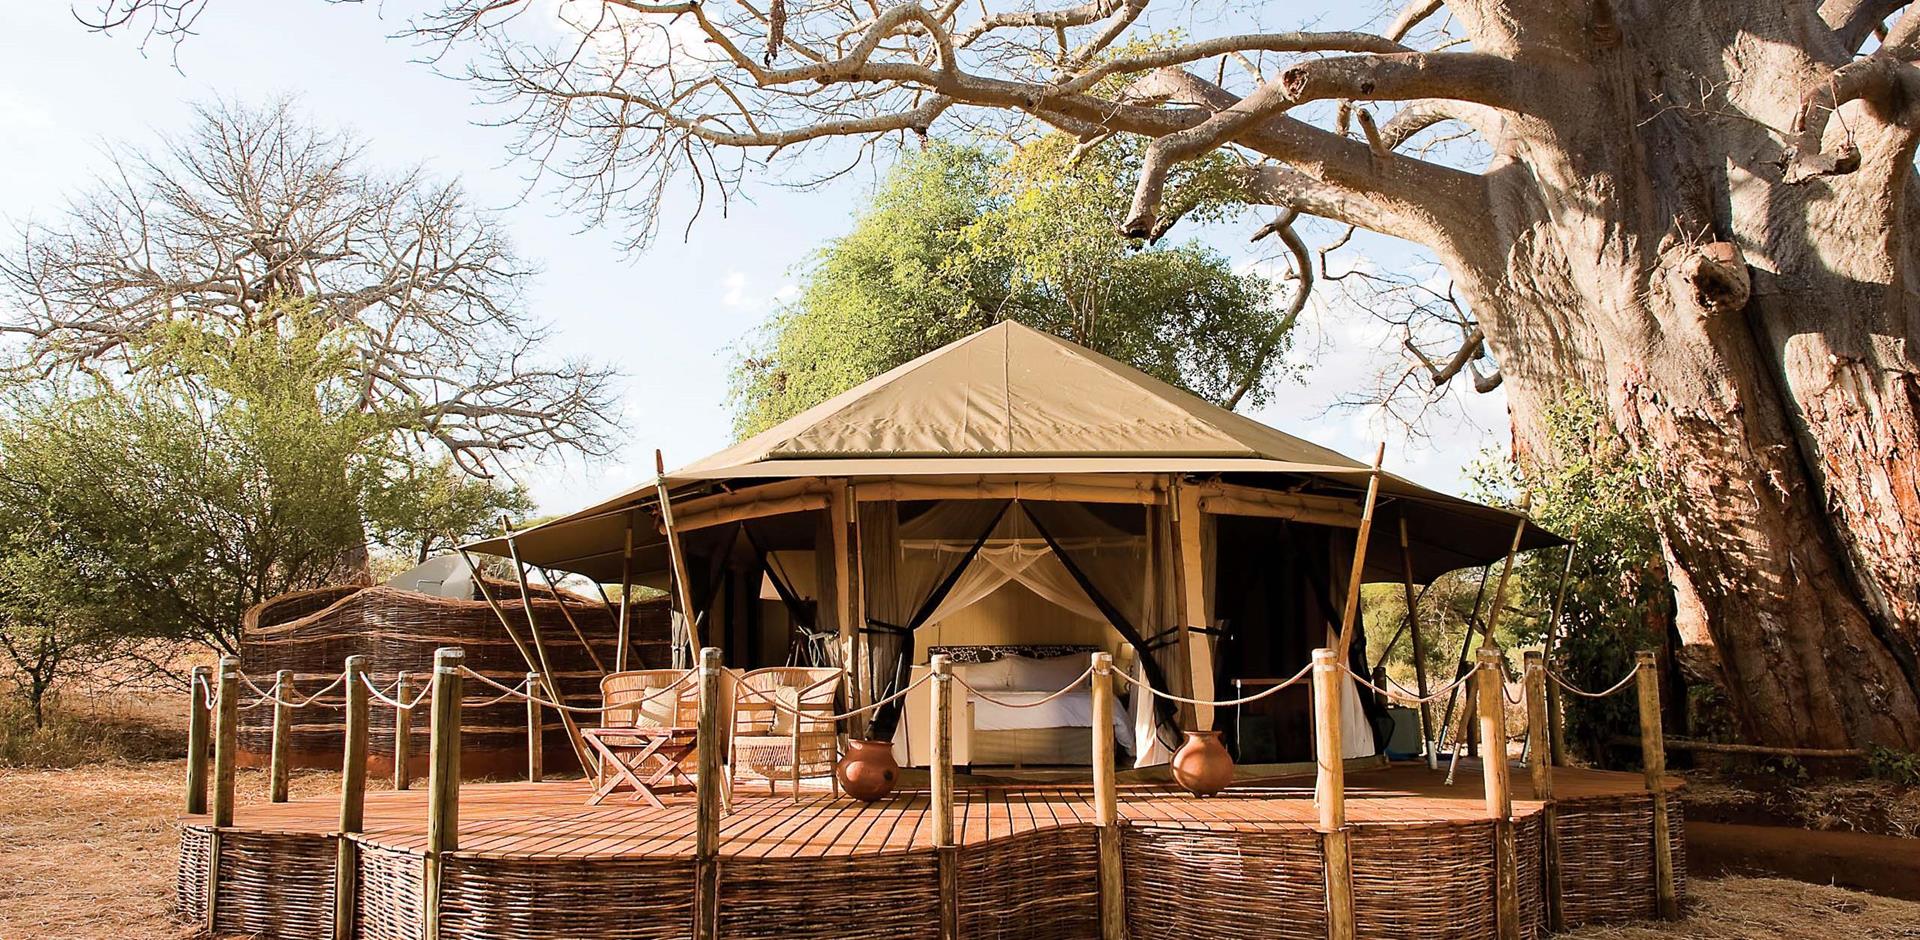 Small Group – Tanzania: Safari in Style highlights